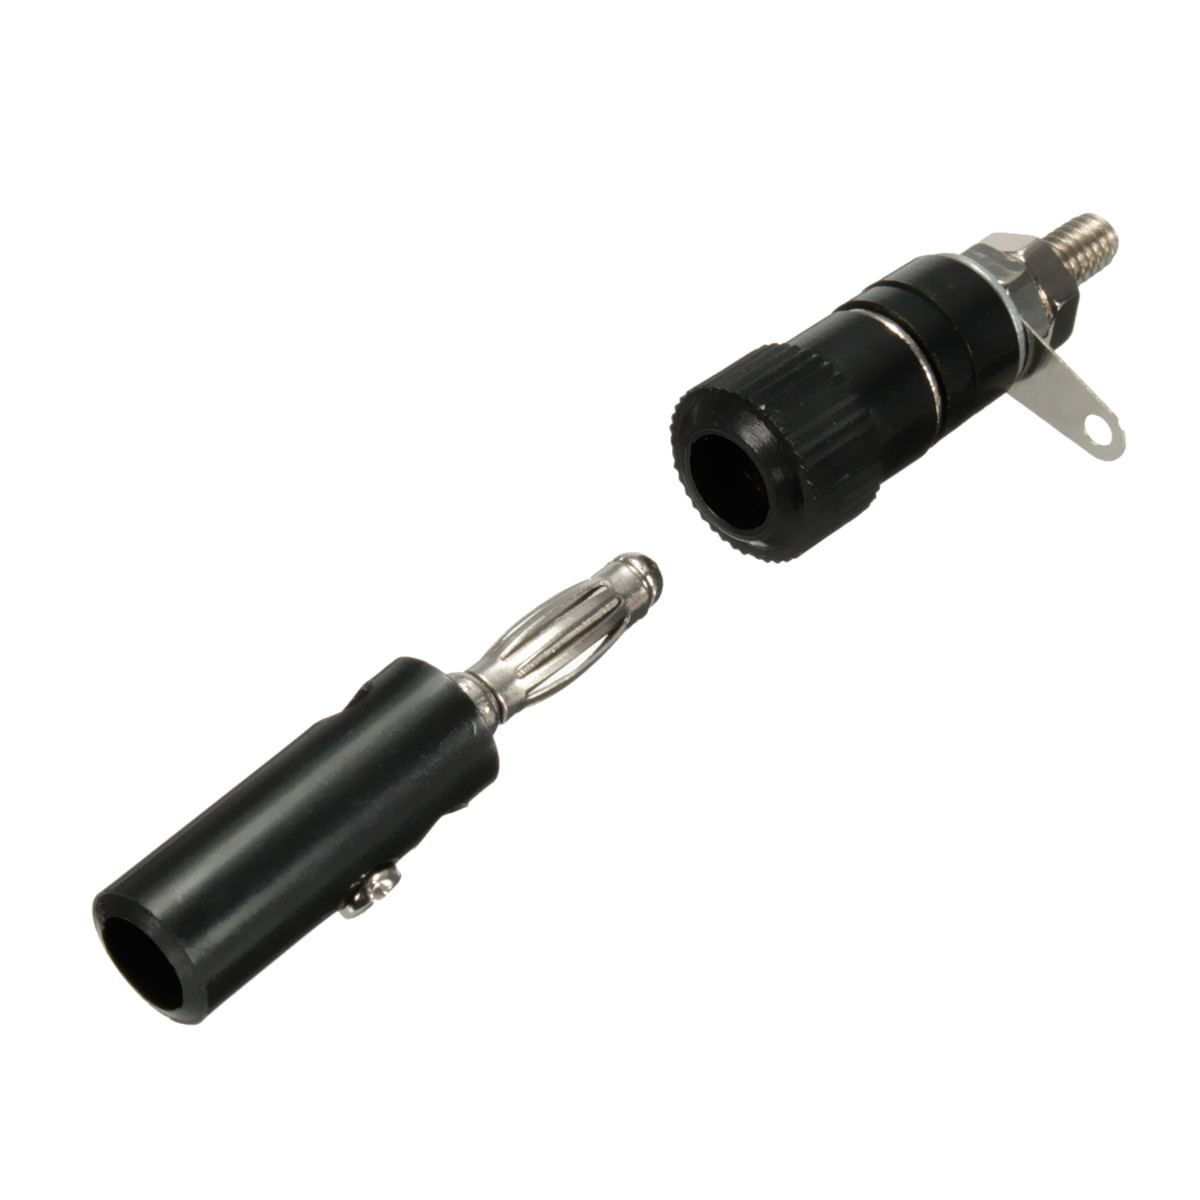 DANIU-50-Pairs-4mm-Terminal-Banana-Plug-Socket-Jack-Connectors-Instrument-Light-Tools-Black-and-Red-1358118-6